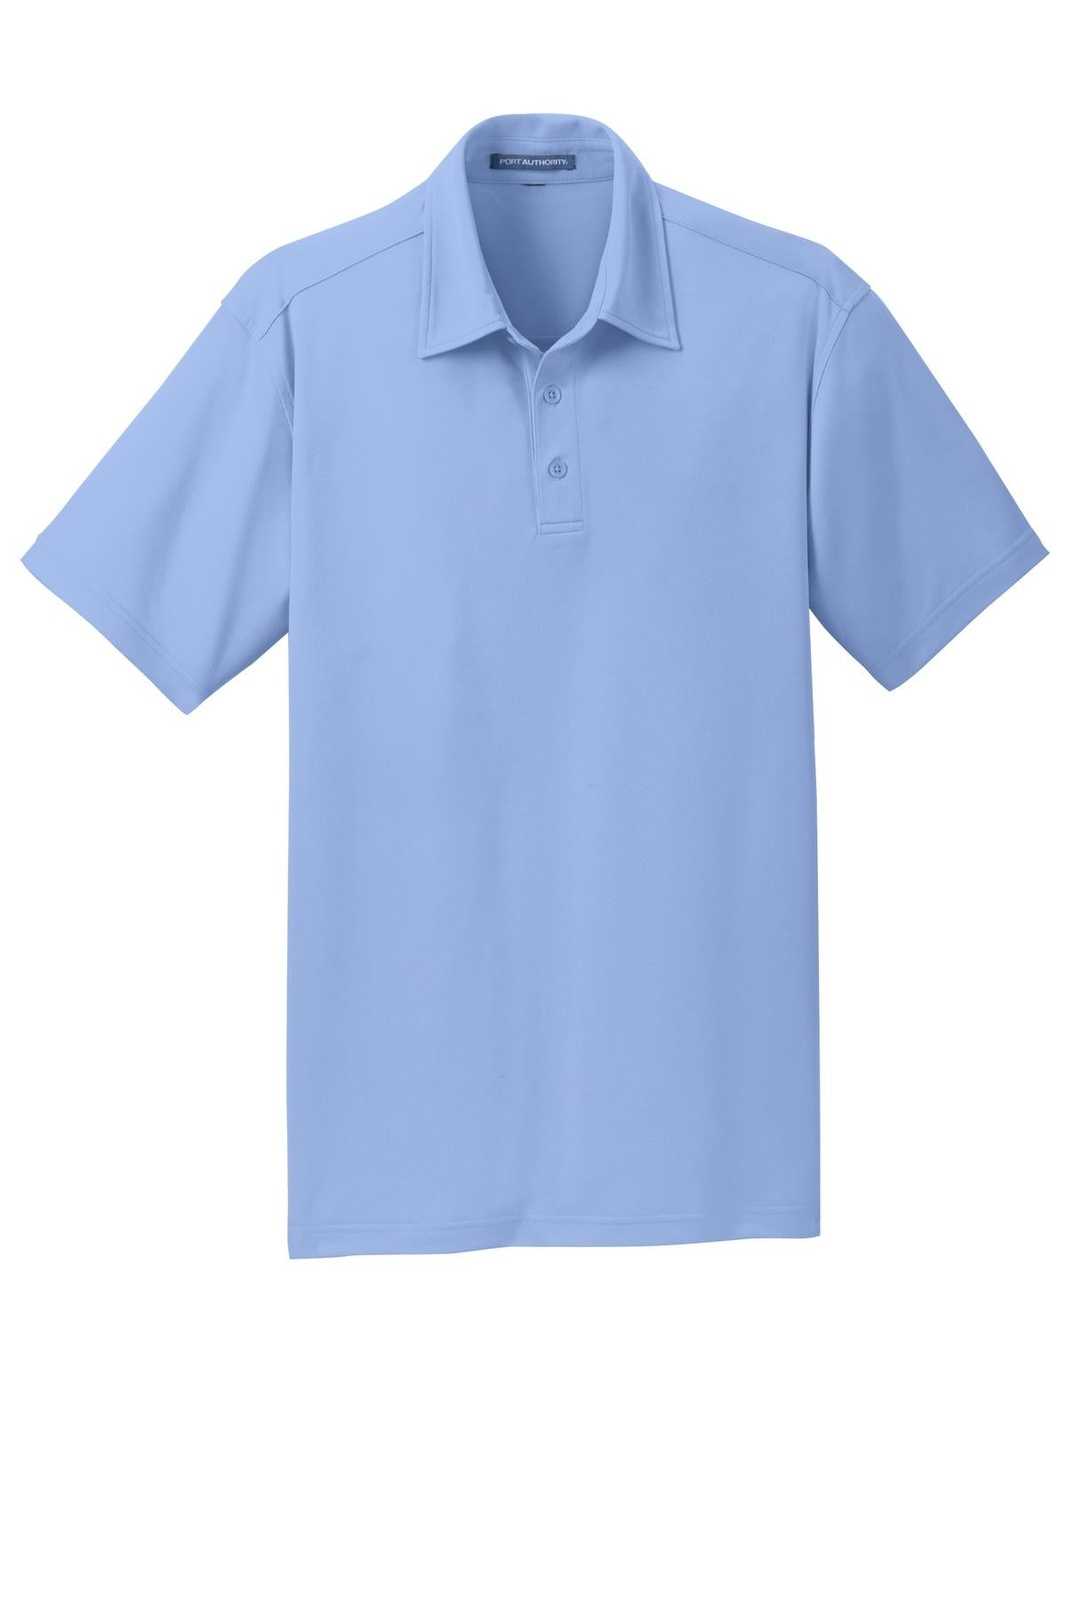 Port Authority K571 Dimension Polo - Dress Shirt Blue - HIT a Double - 5